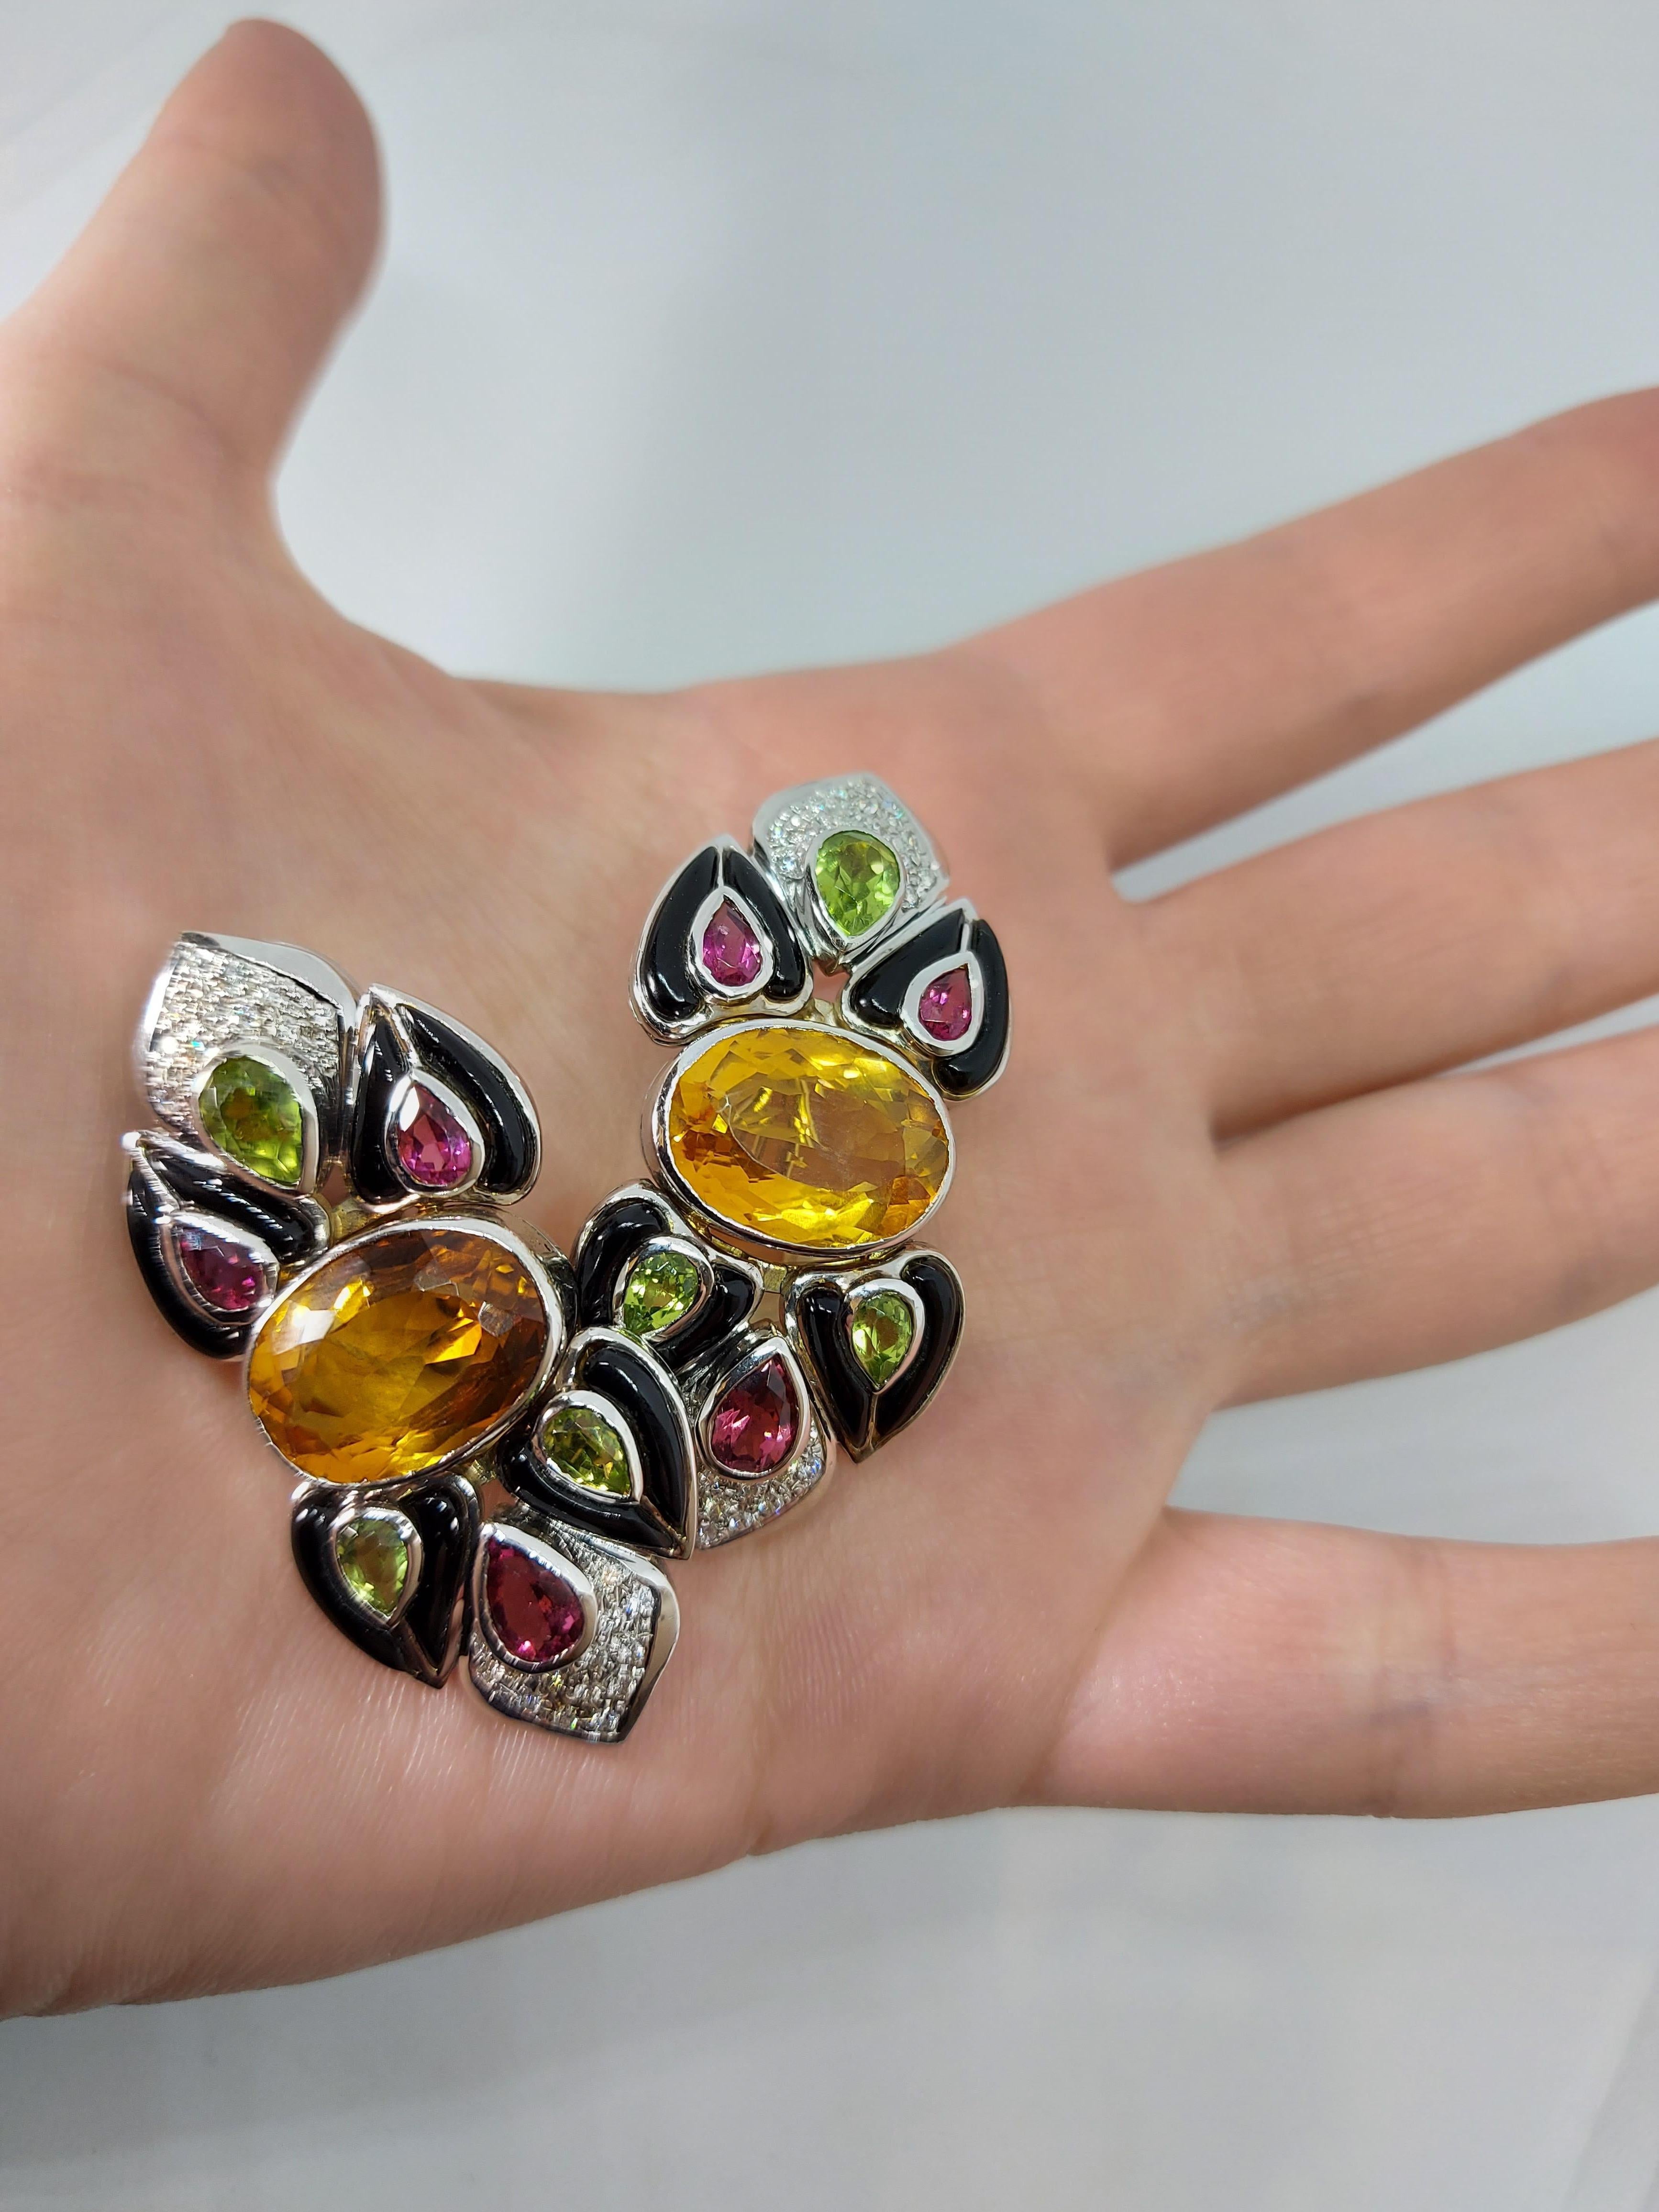 18 Karat White Gold Diamond & Precious Stones, Clip-On Earrings with Black Onyx For Sale 7